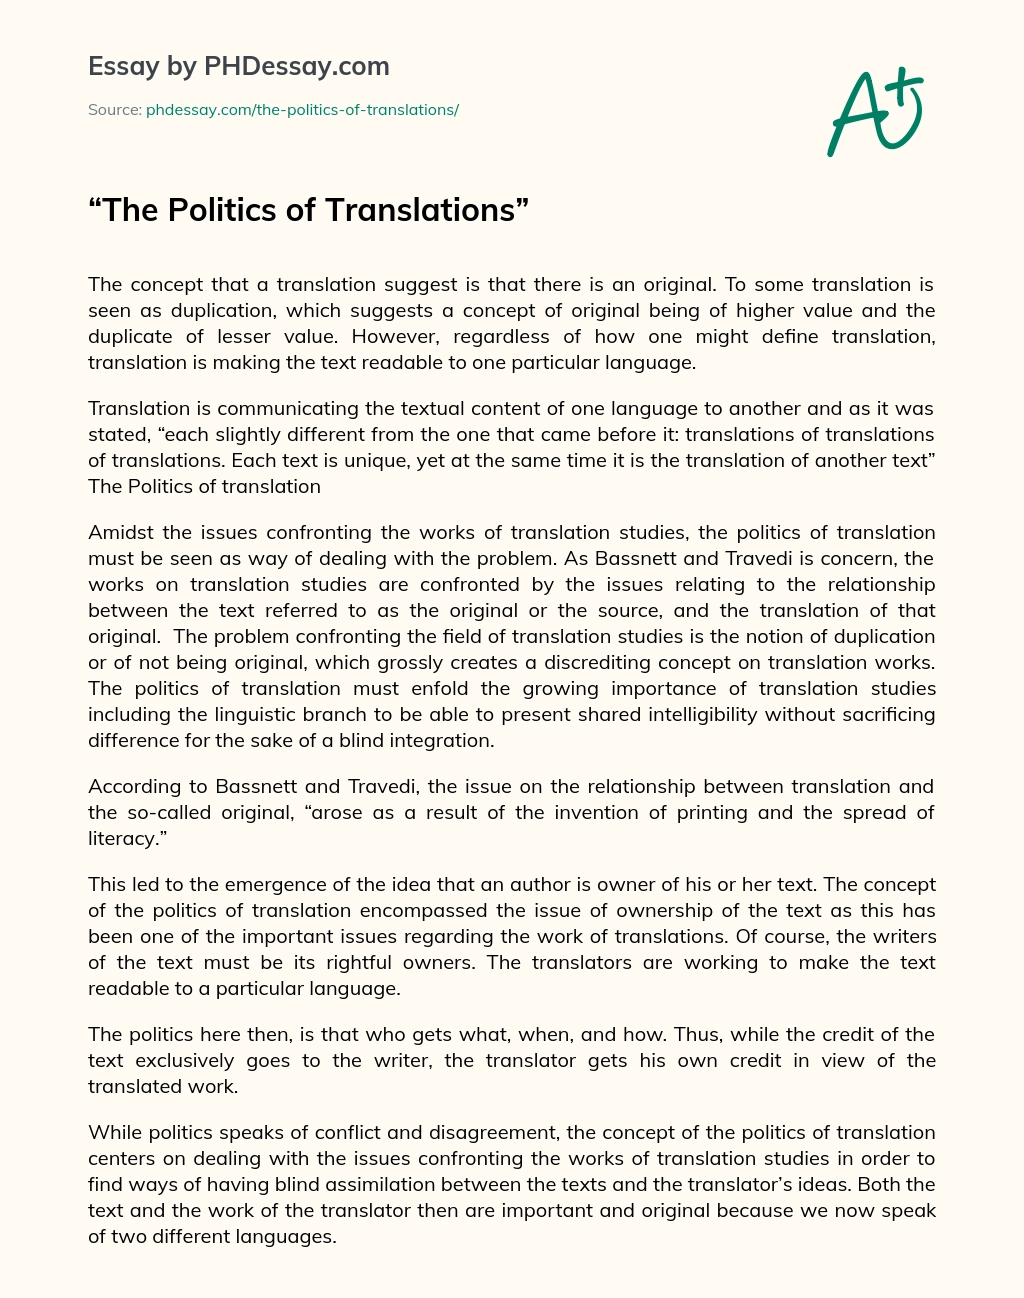 The Politics of Translations essay